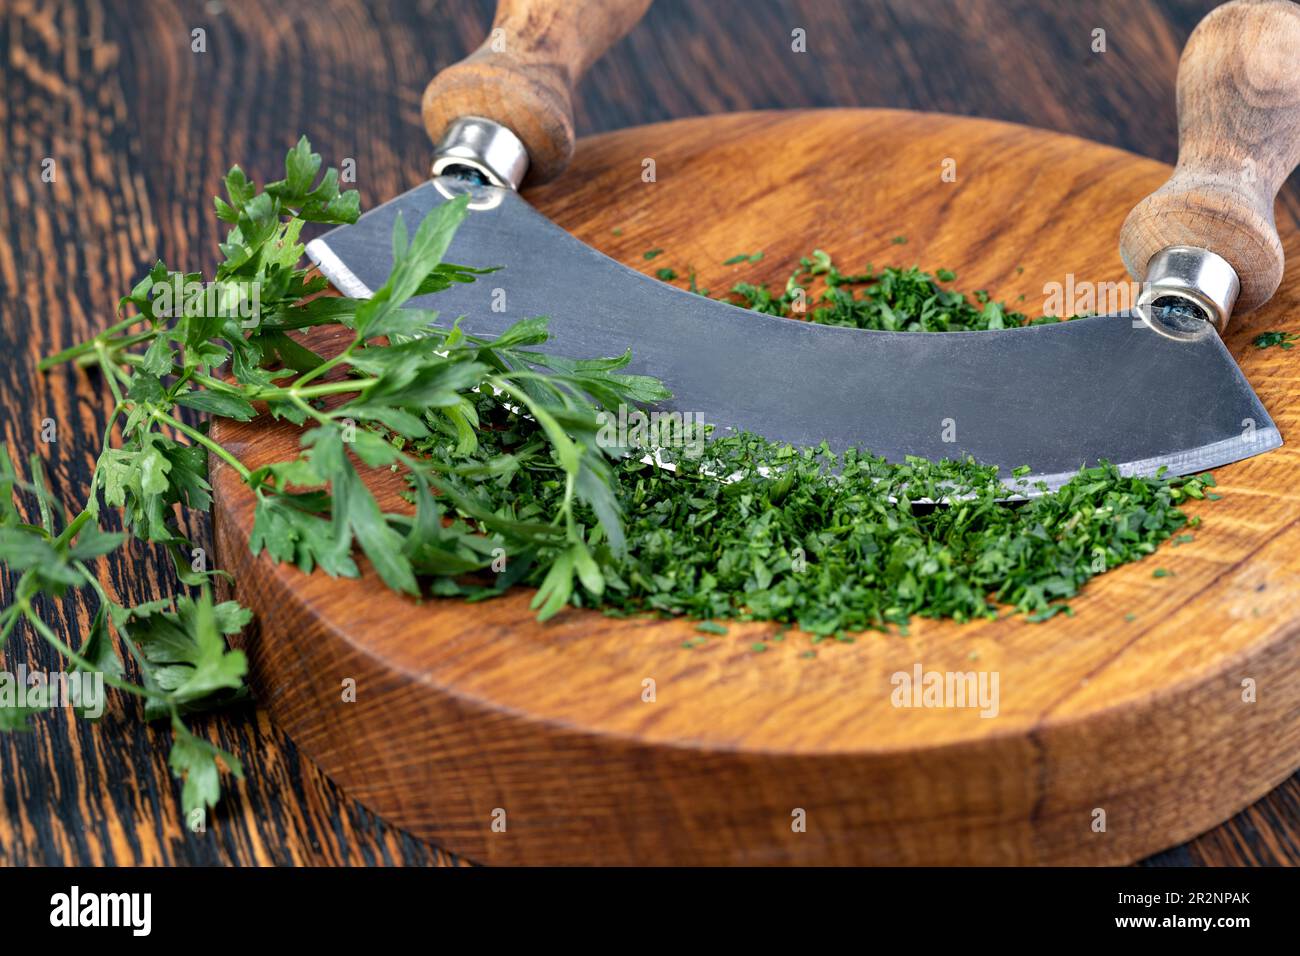 https://c8.alamy.com/comp/2R2NPAK/parsley-on-a-chopping-board-in-the-kitchen-2R2NPAK.jpg